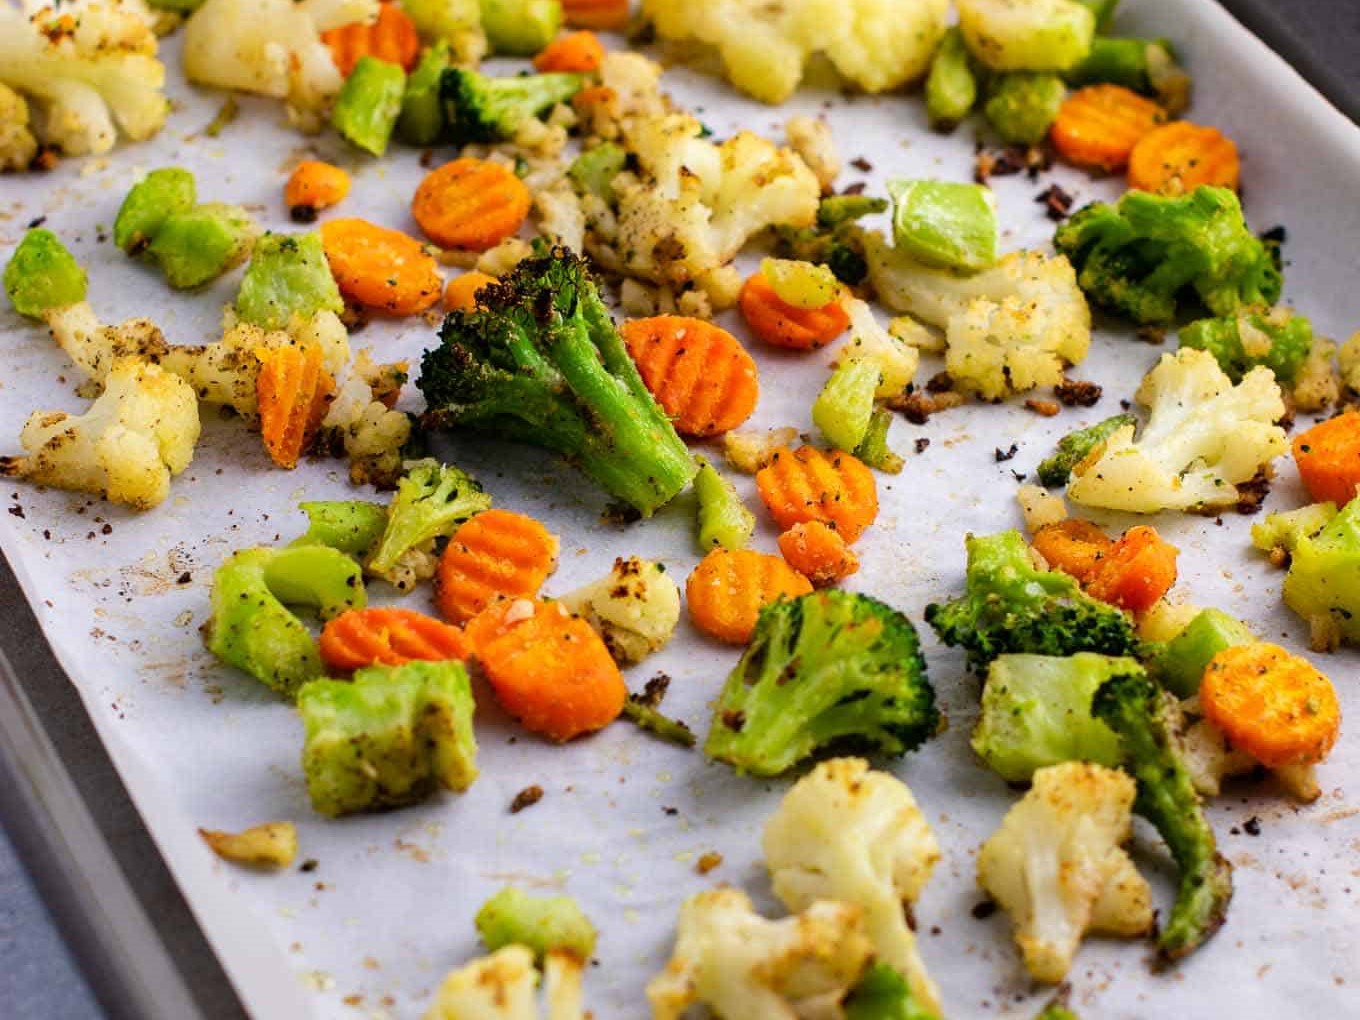 How To Cook Frozen Vegetables In Oven